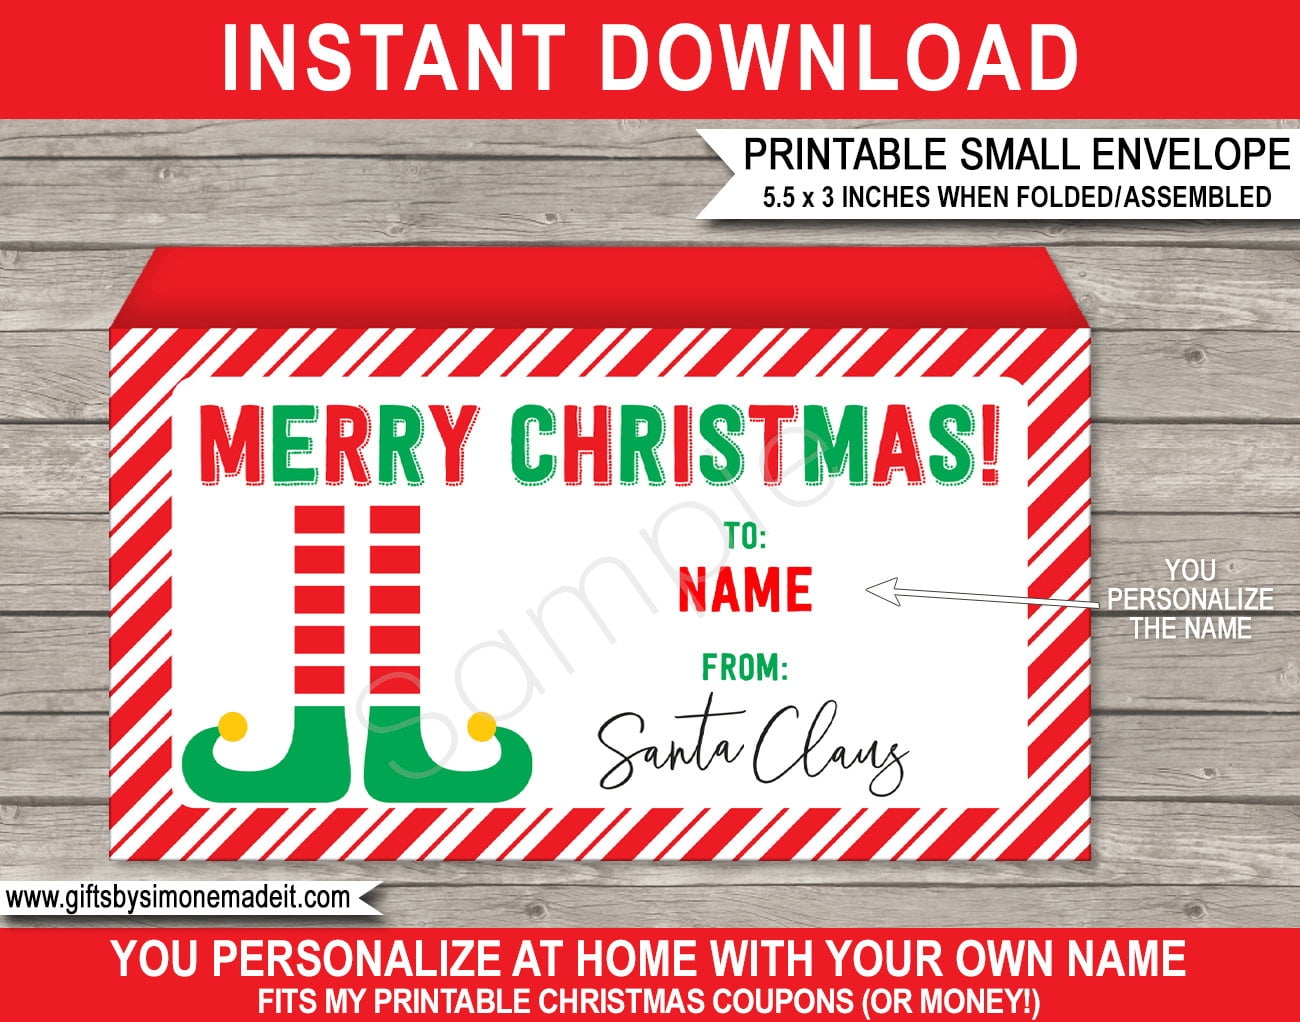 Printable Envelope For Christmas